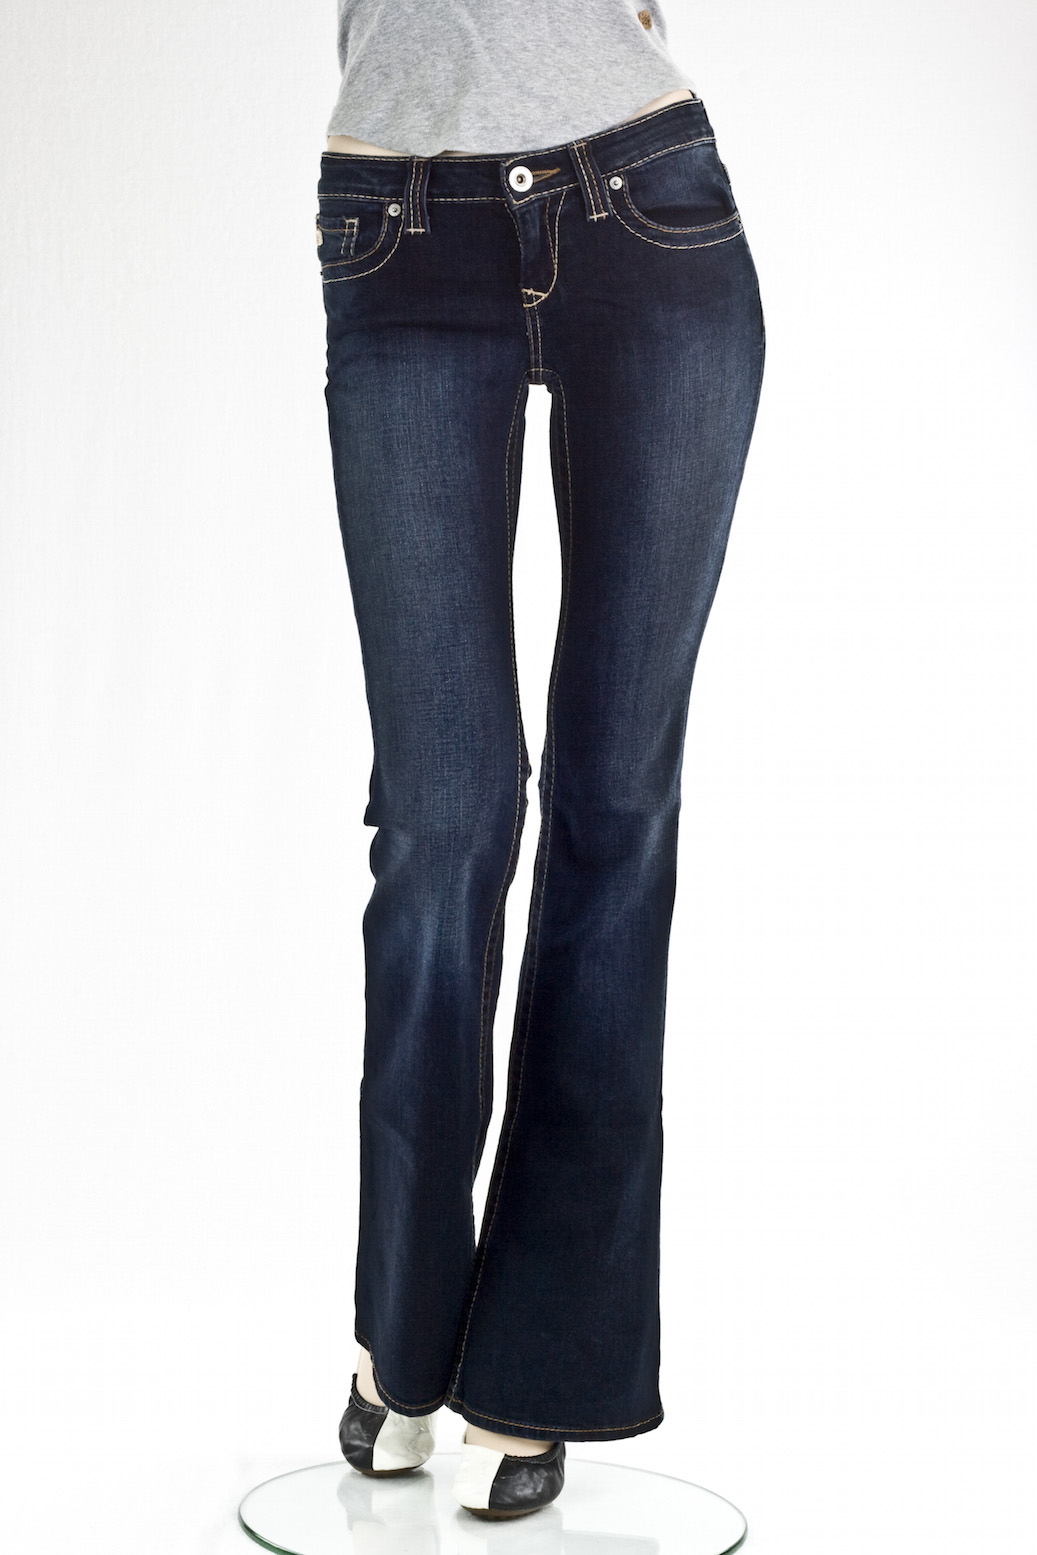 Женские джинсы Big Star "Буткат" Remy Flare Low Rise интернет-магазин Fashion Jeans